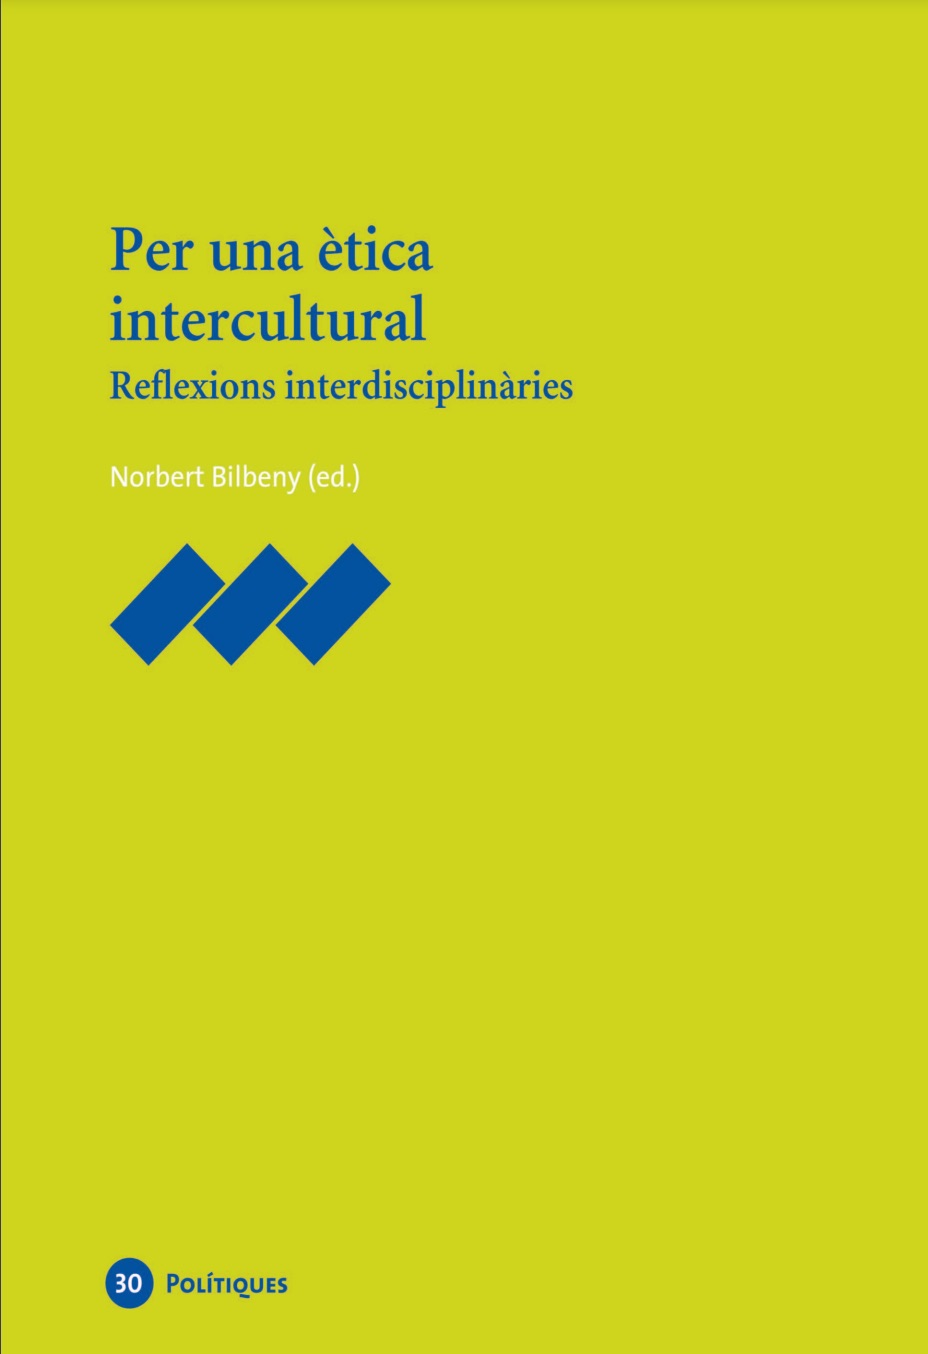 Cover of the book “Per una ètica intercultural” by Norbert Bilbeny